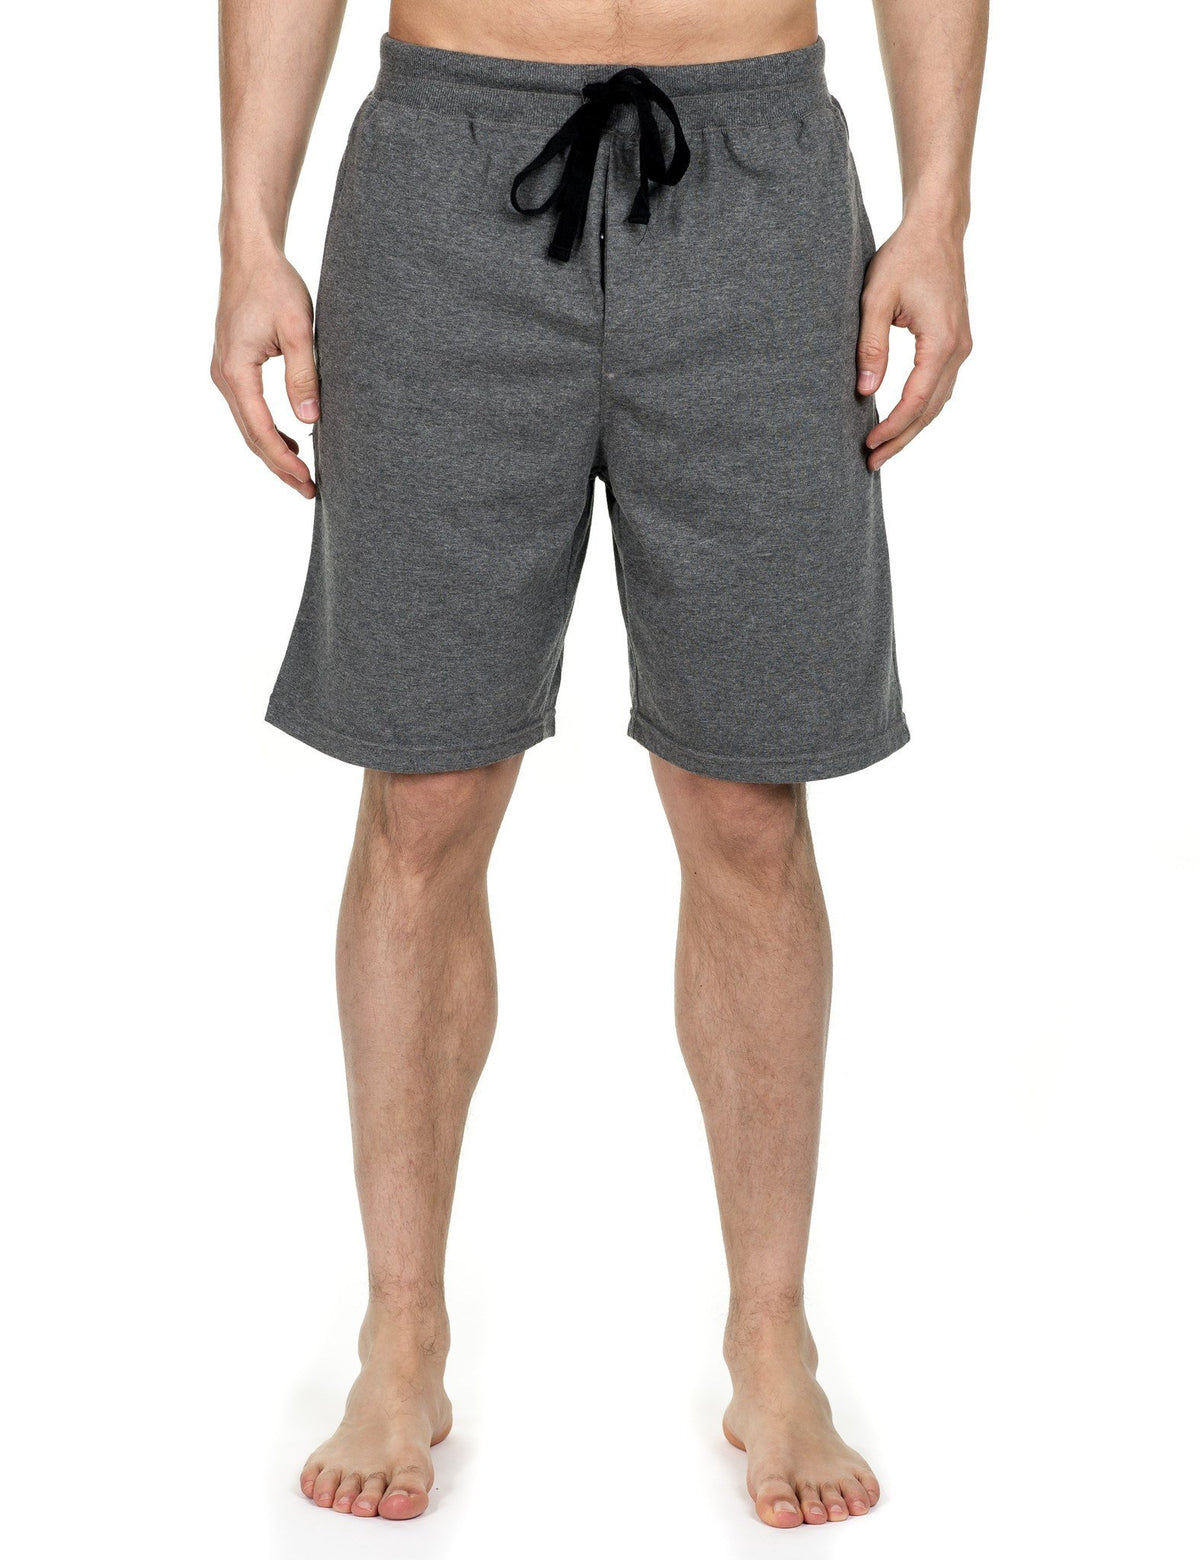 Men's Premium Knit Lounge/Sleep Shorts - Charcoal